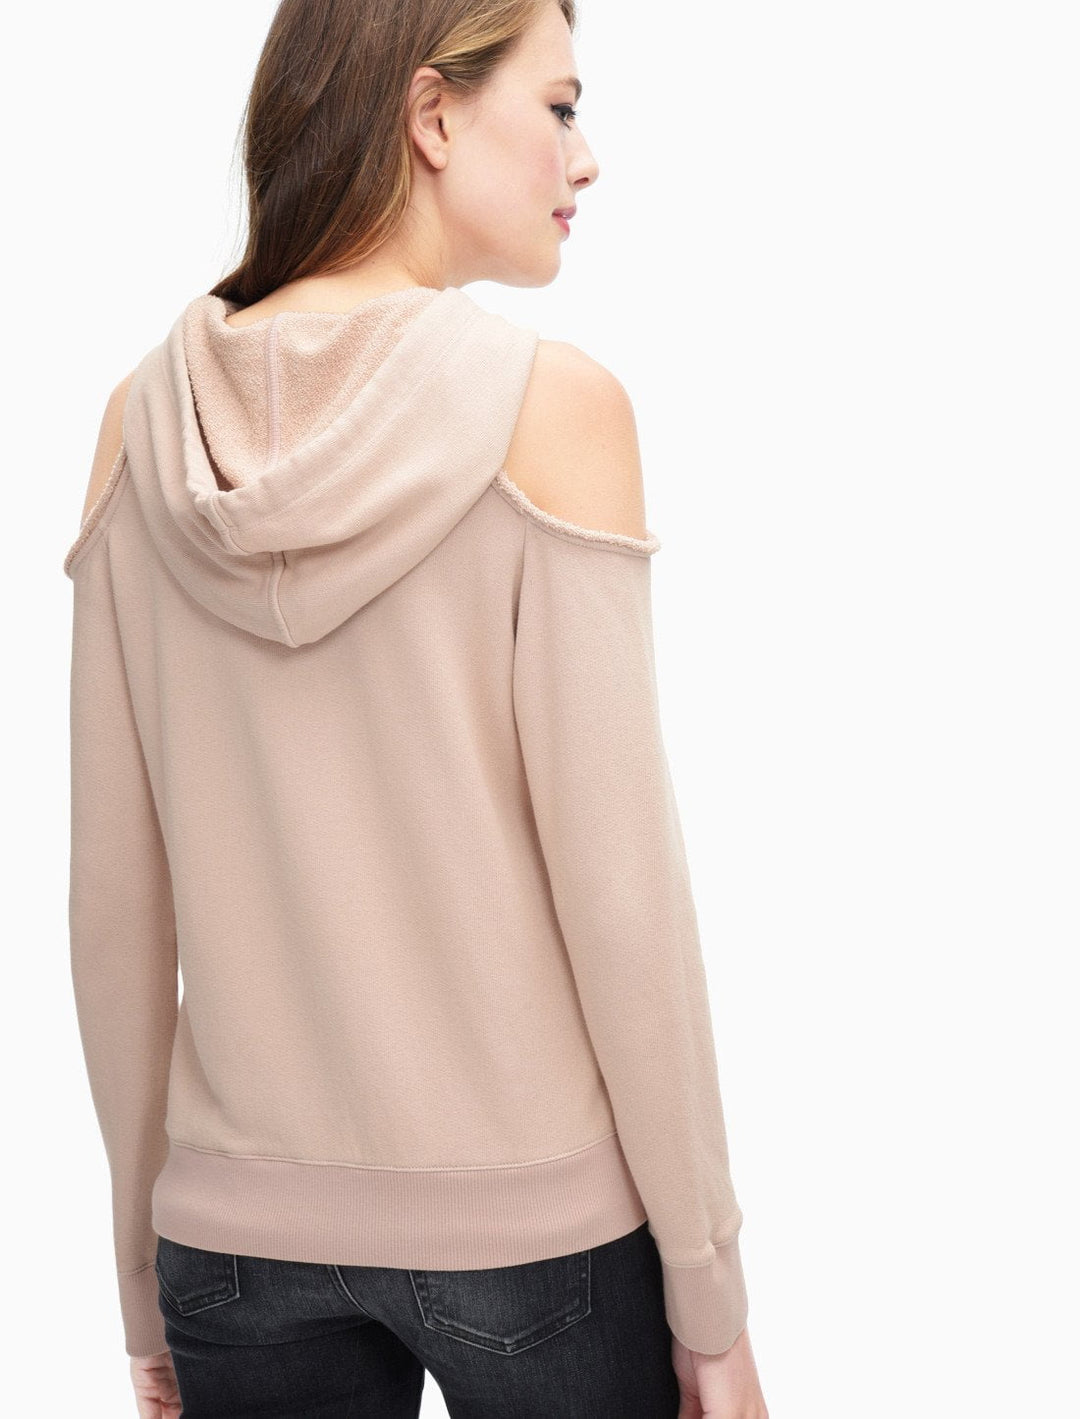 Splendid - Soft Cotton Cold Shoulder Sweatshirt Pink Beige